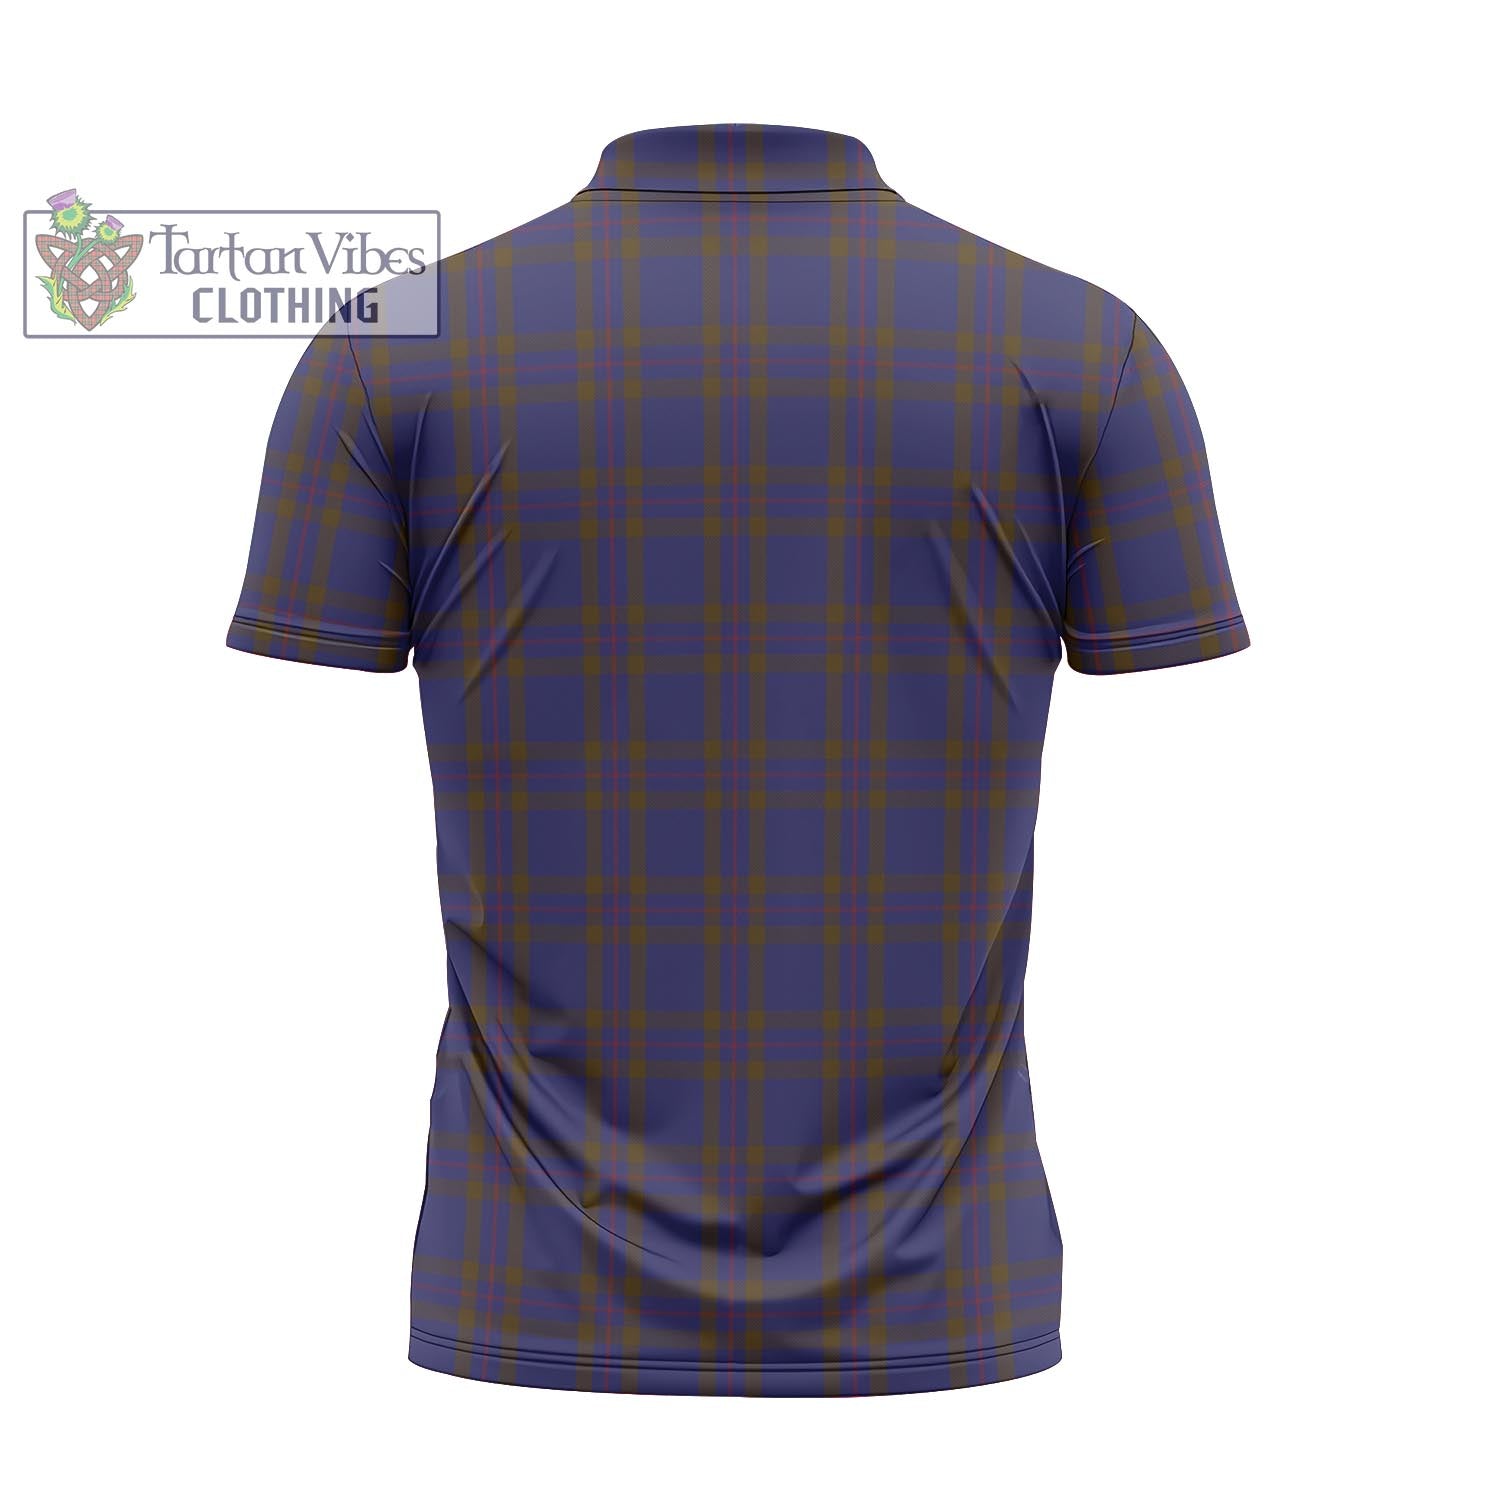 Tartan Vibes Clothing Elliot Tartan Zipper Polo Shirt with Family Crest